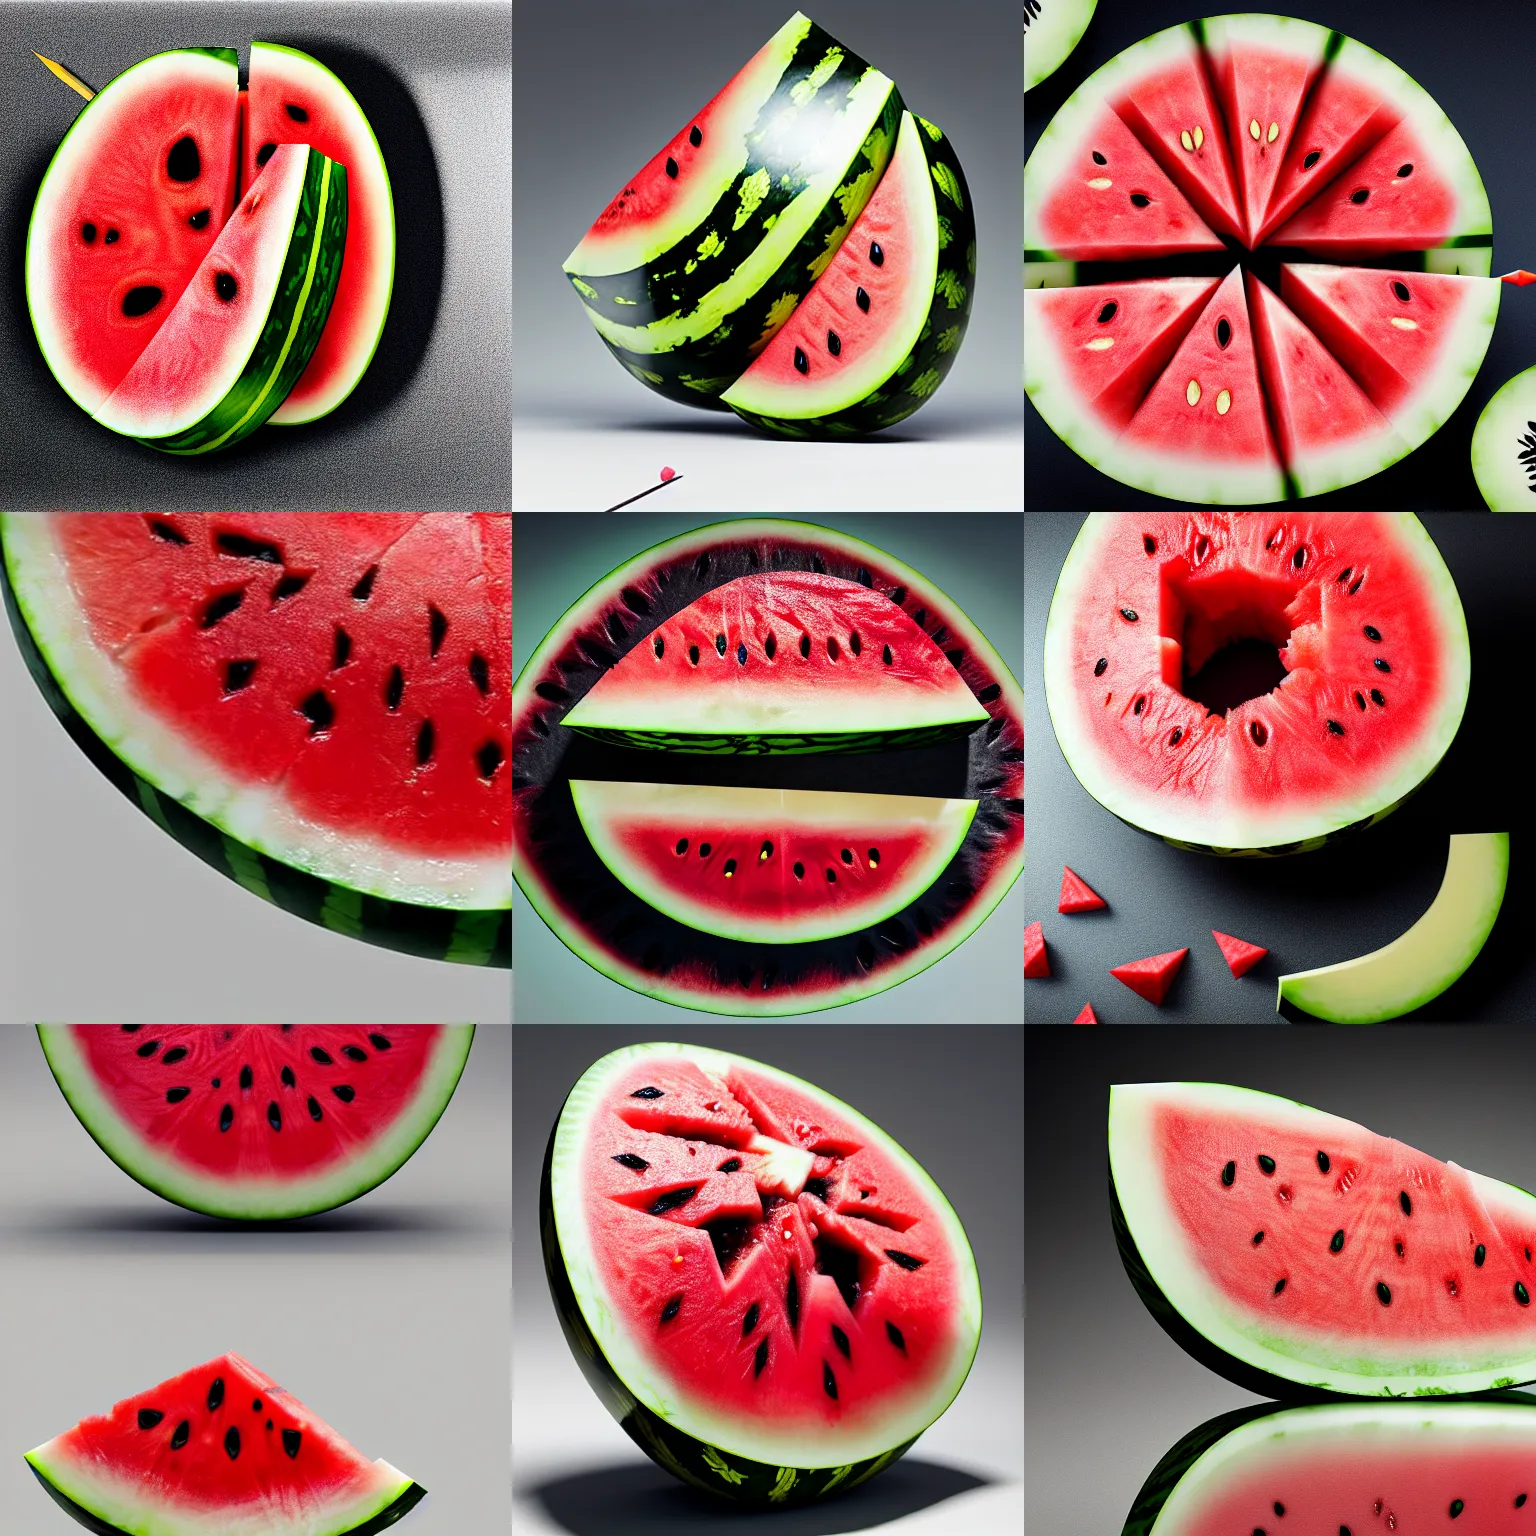 Prompt: a whole uncut watermelon pierced by an arrow, detailed render, 8k